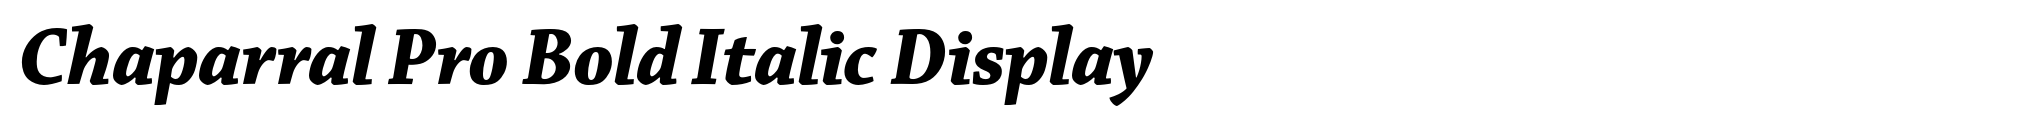 Chaparral Pro Bold Italic Display image